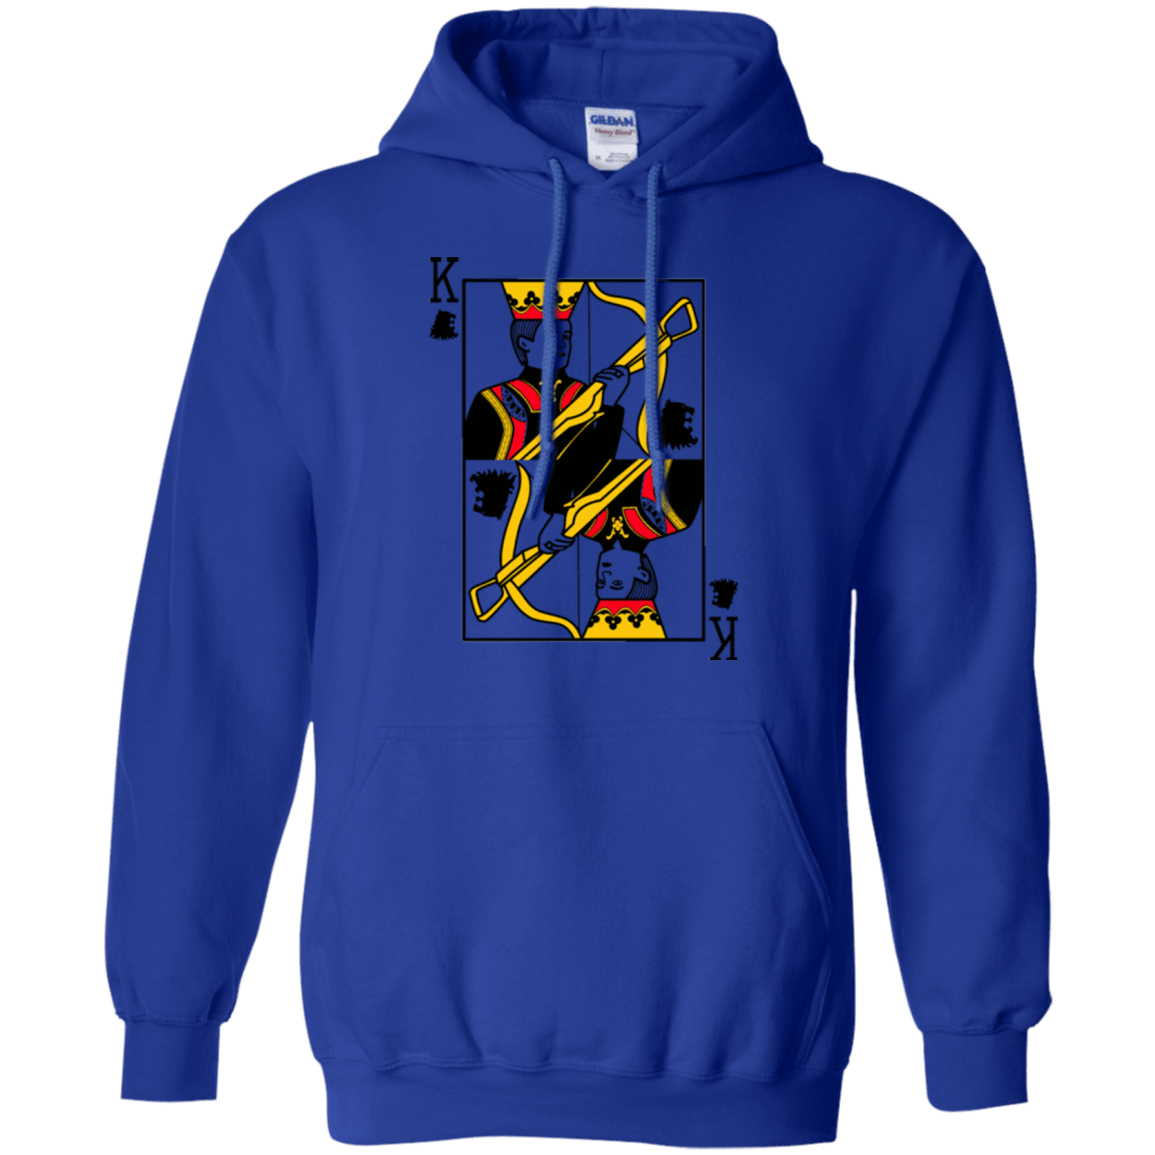 Sweatshirts Royal / Small King Joffrey Pullover Hoodie